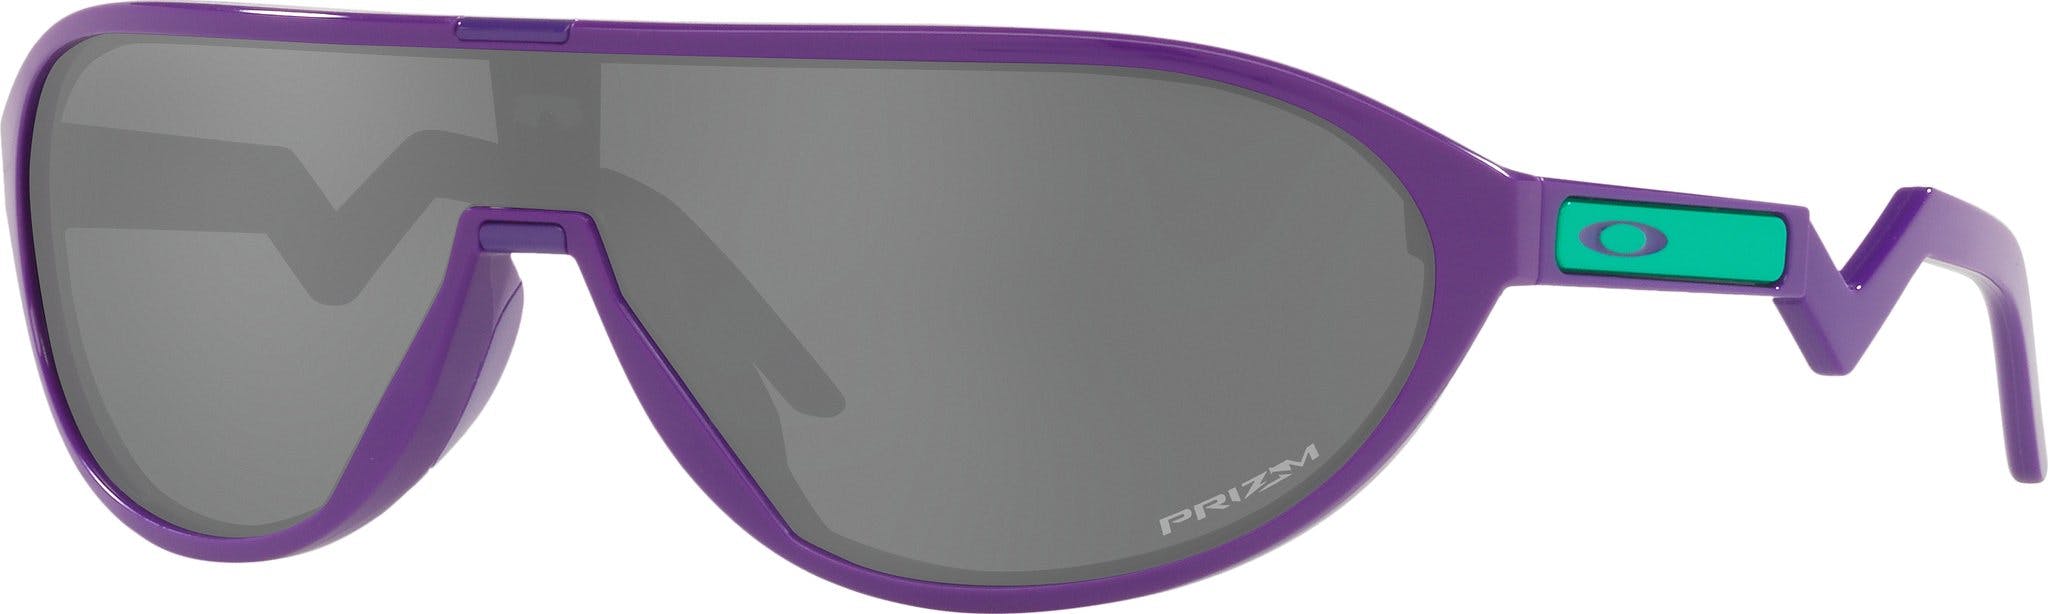 Product image for CMDN Sunglasses - Electric Purple - Prizm Black Lens- Men's